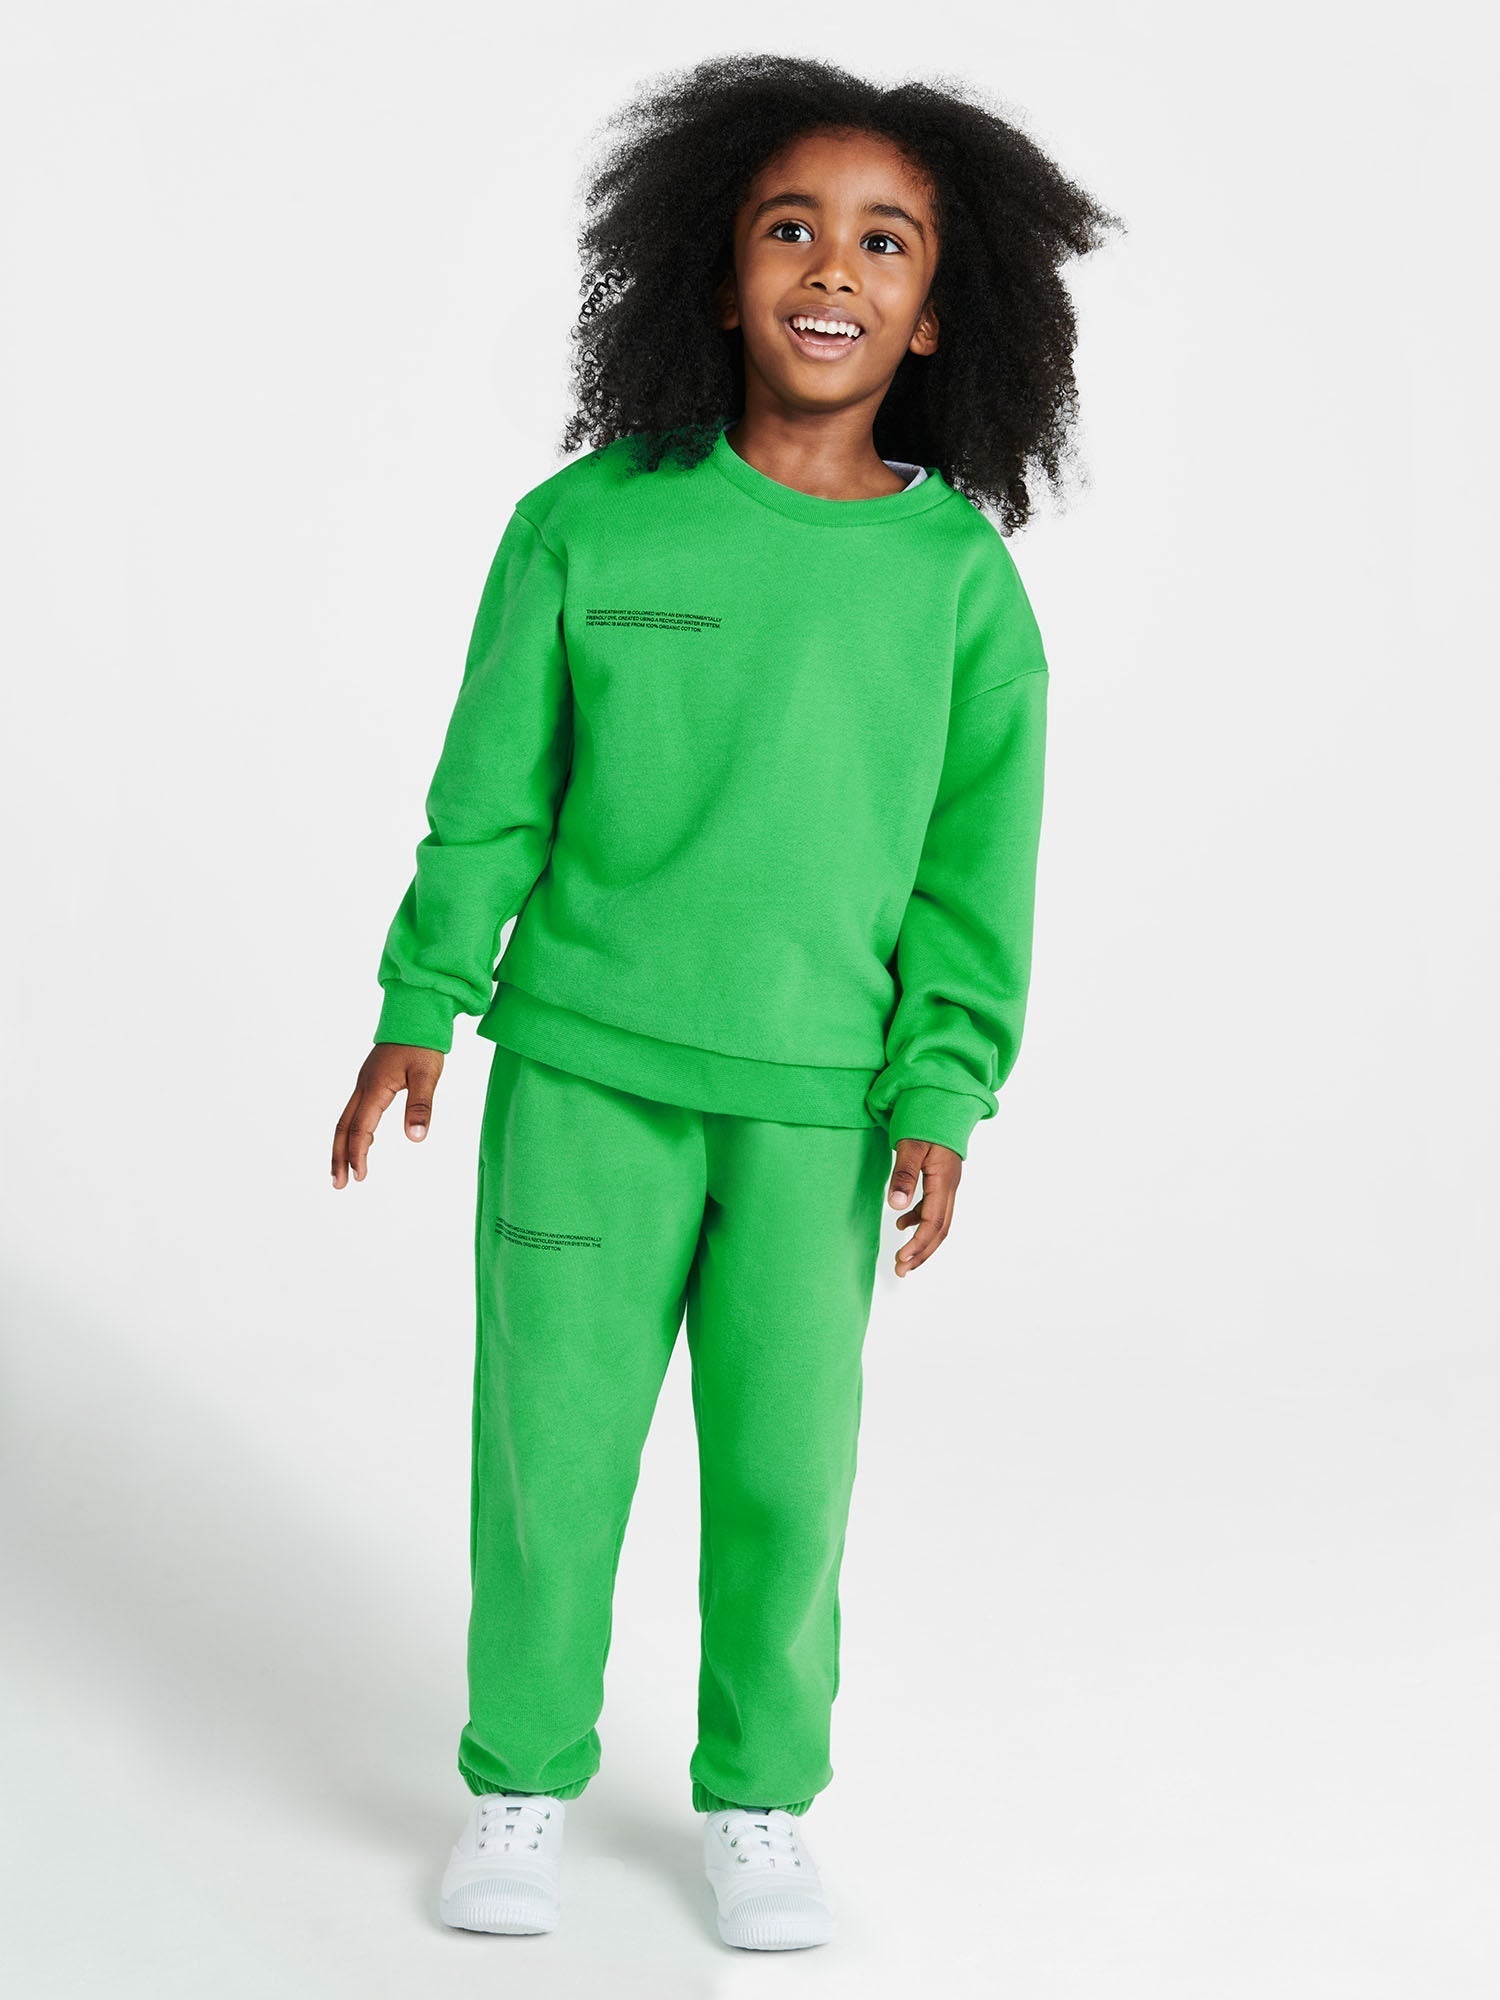 Kids Organic Cotton Sweatshirt Jade Green Model